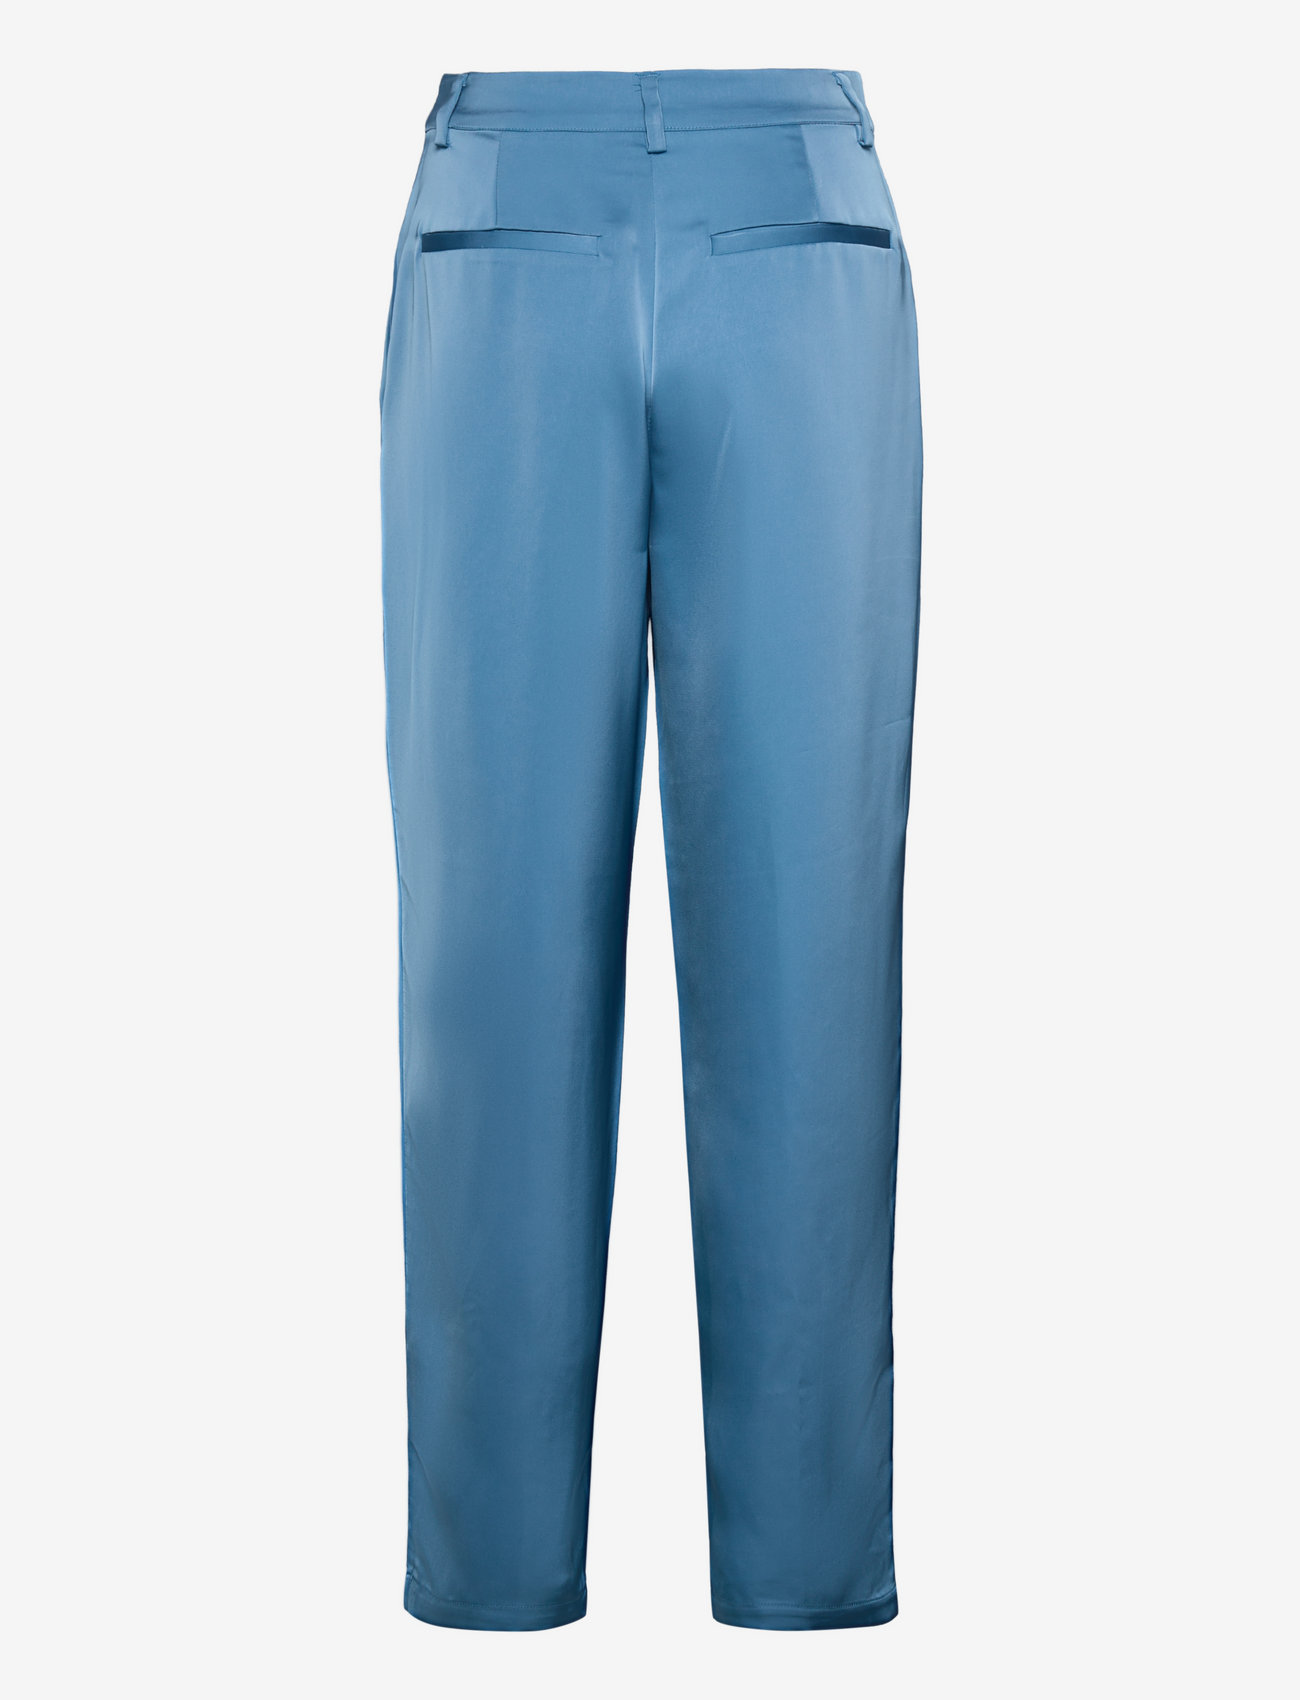 bzr - Satulla Dollar pants - tailored trousers - ocean blue - 1